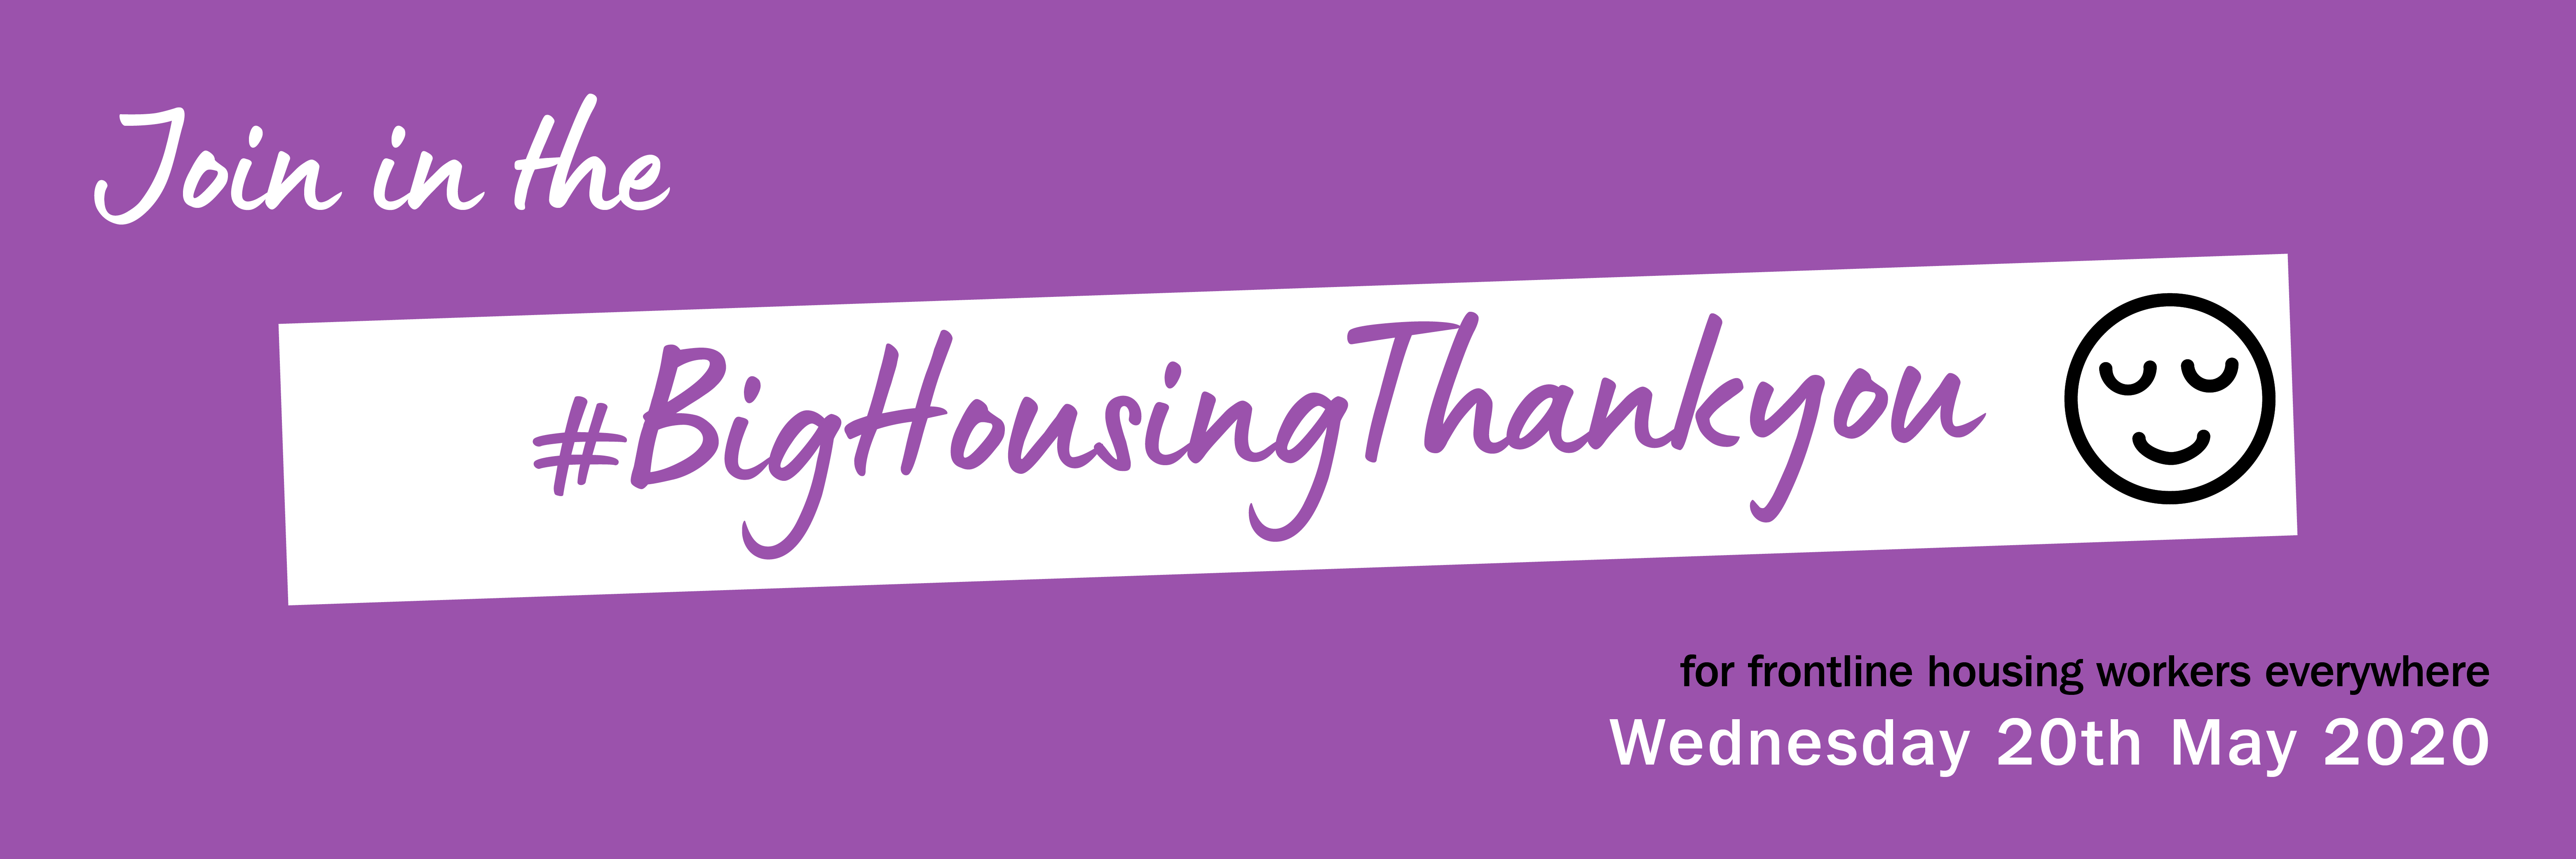 Big housing thank you Twitter banner - purple